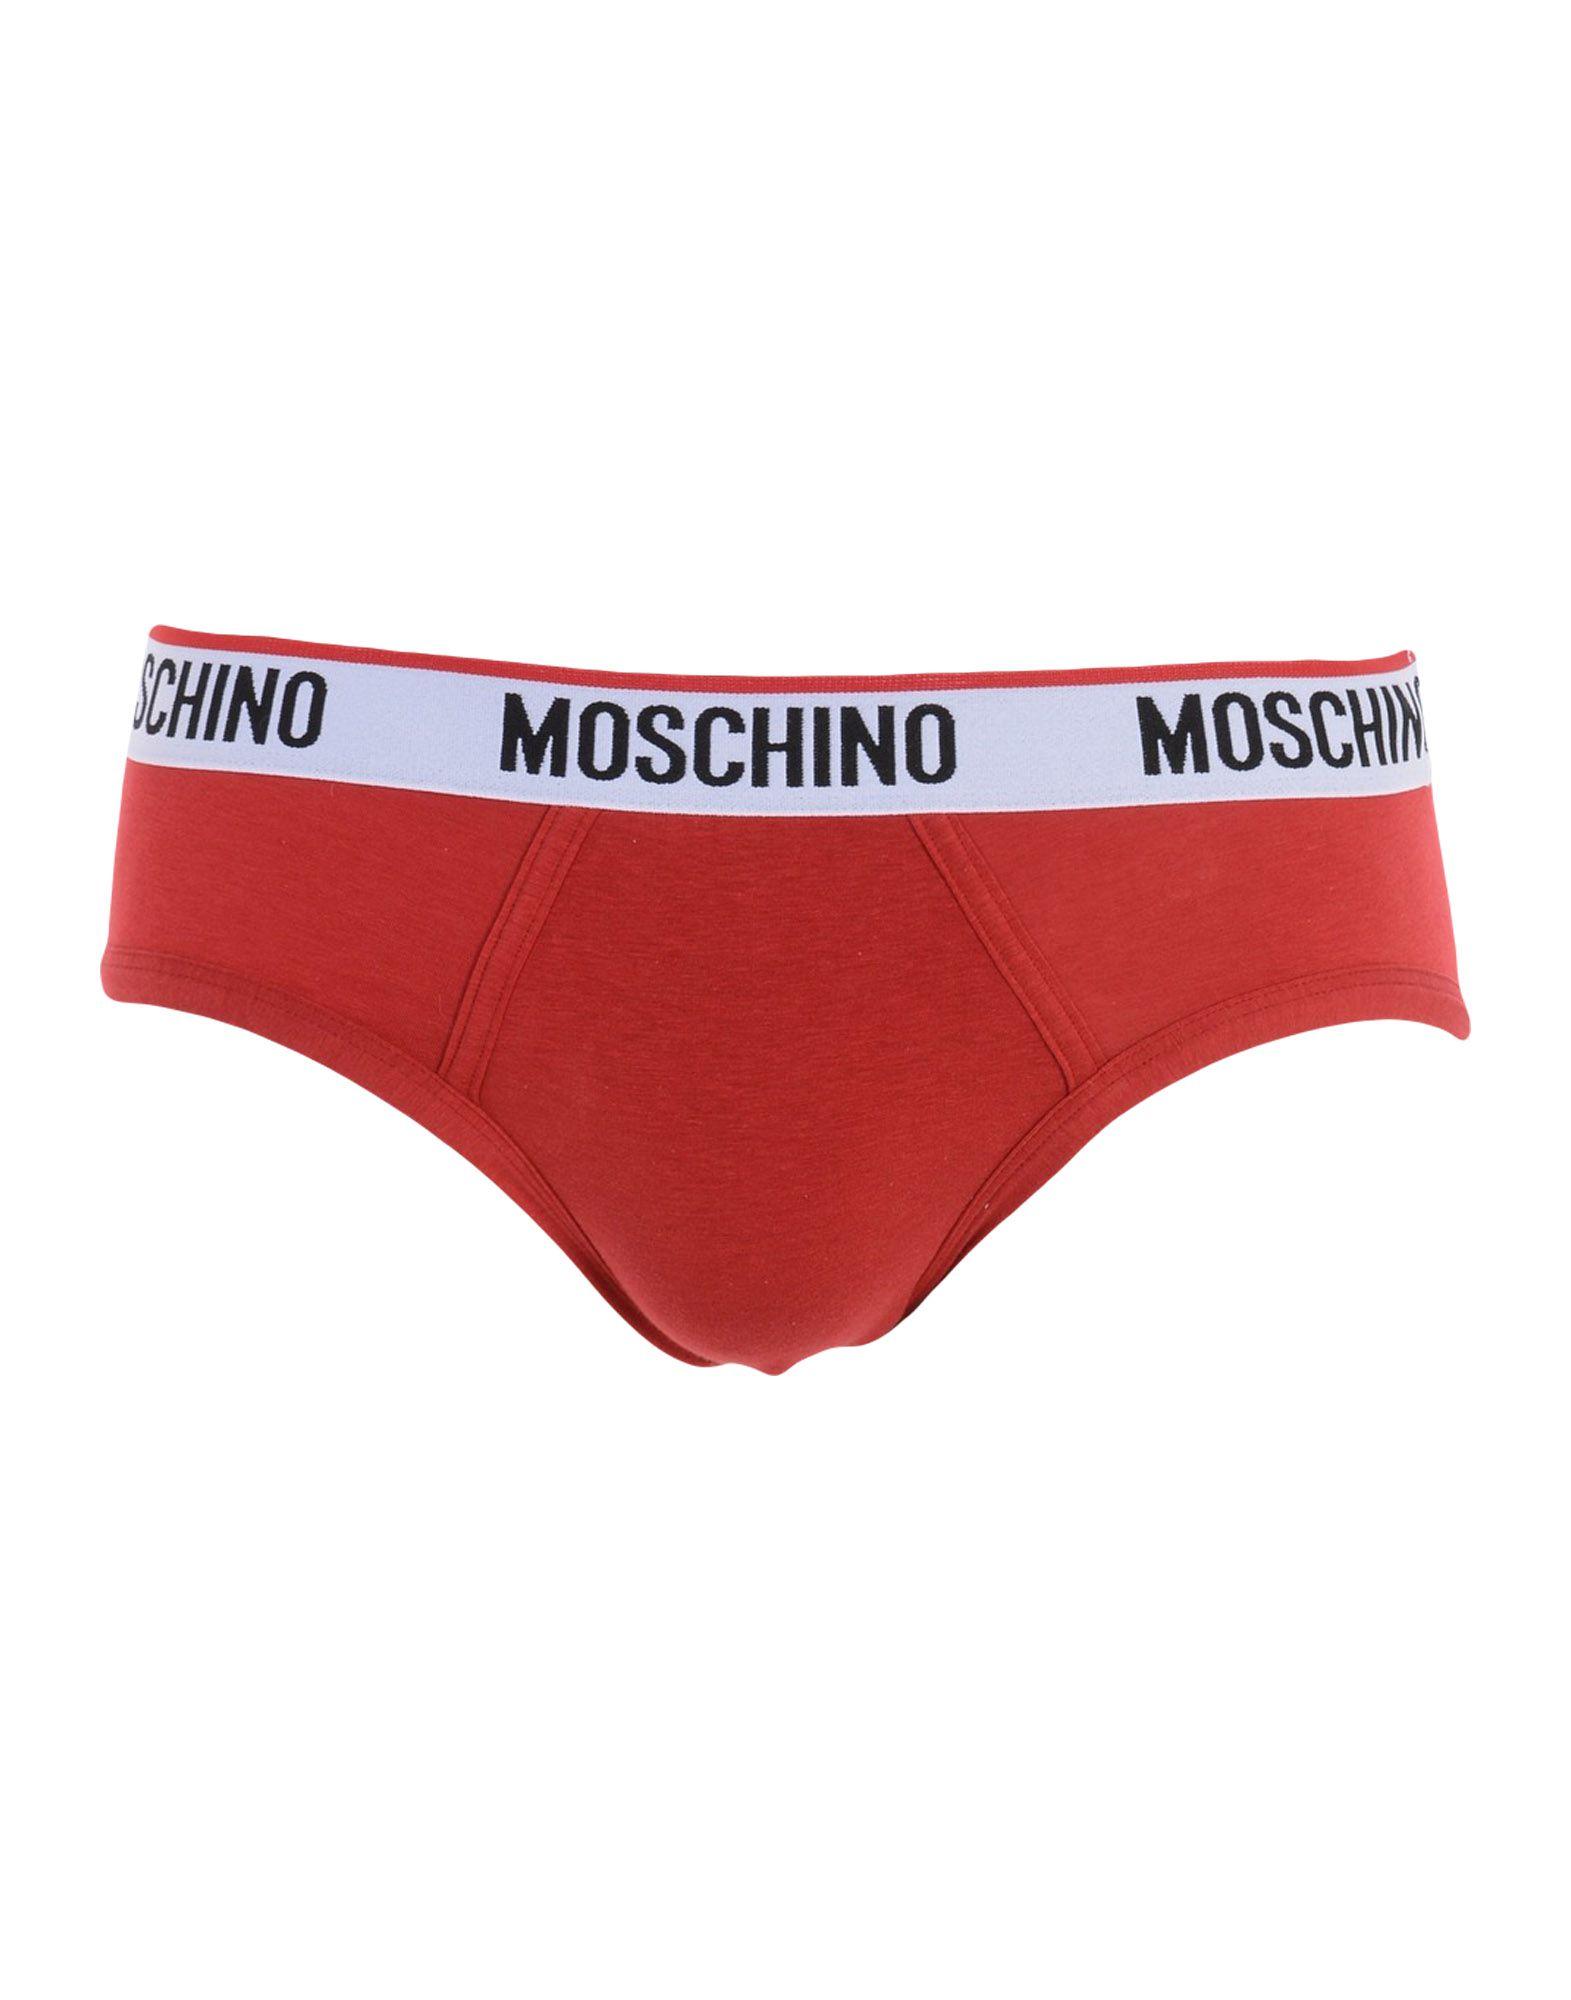 Moschino Micro Brief | Red